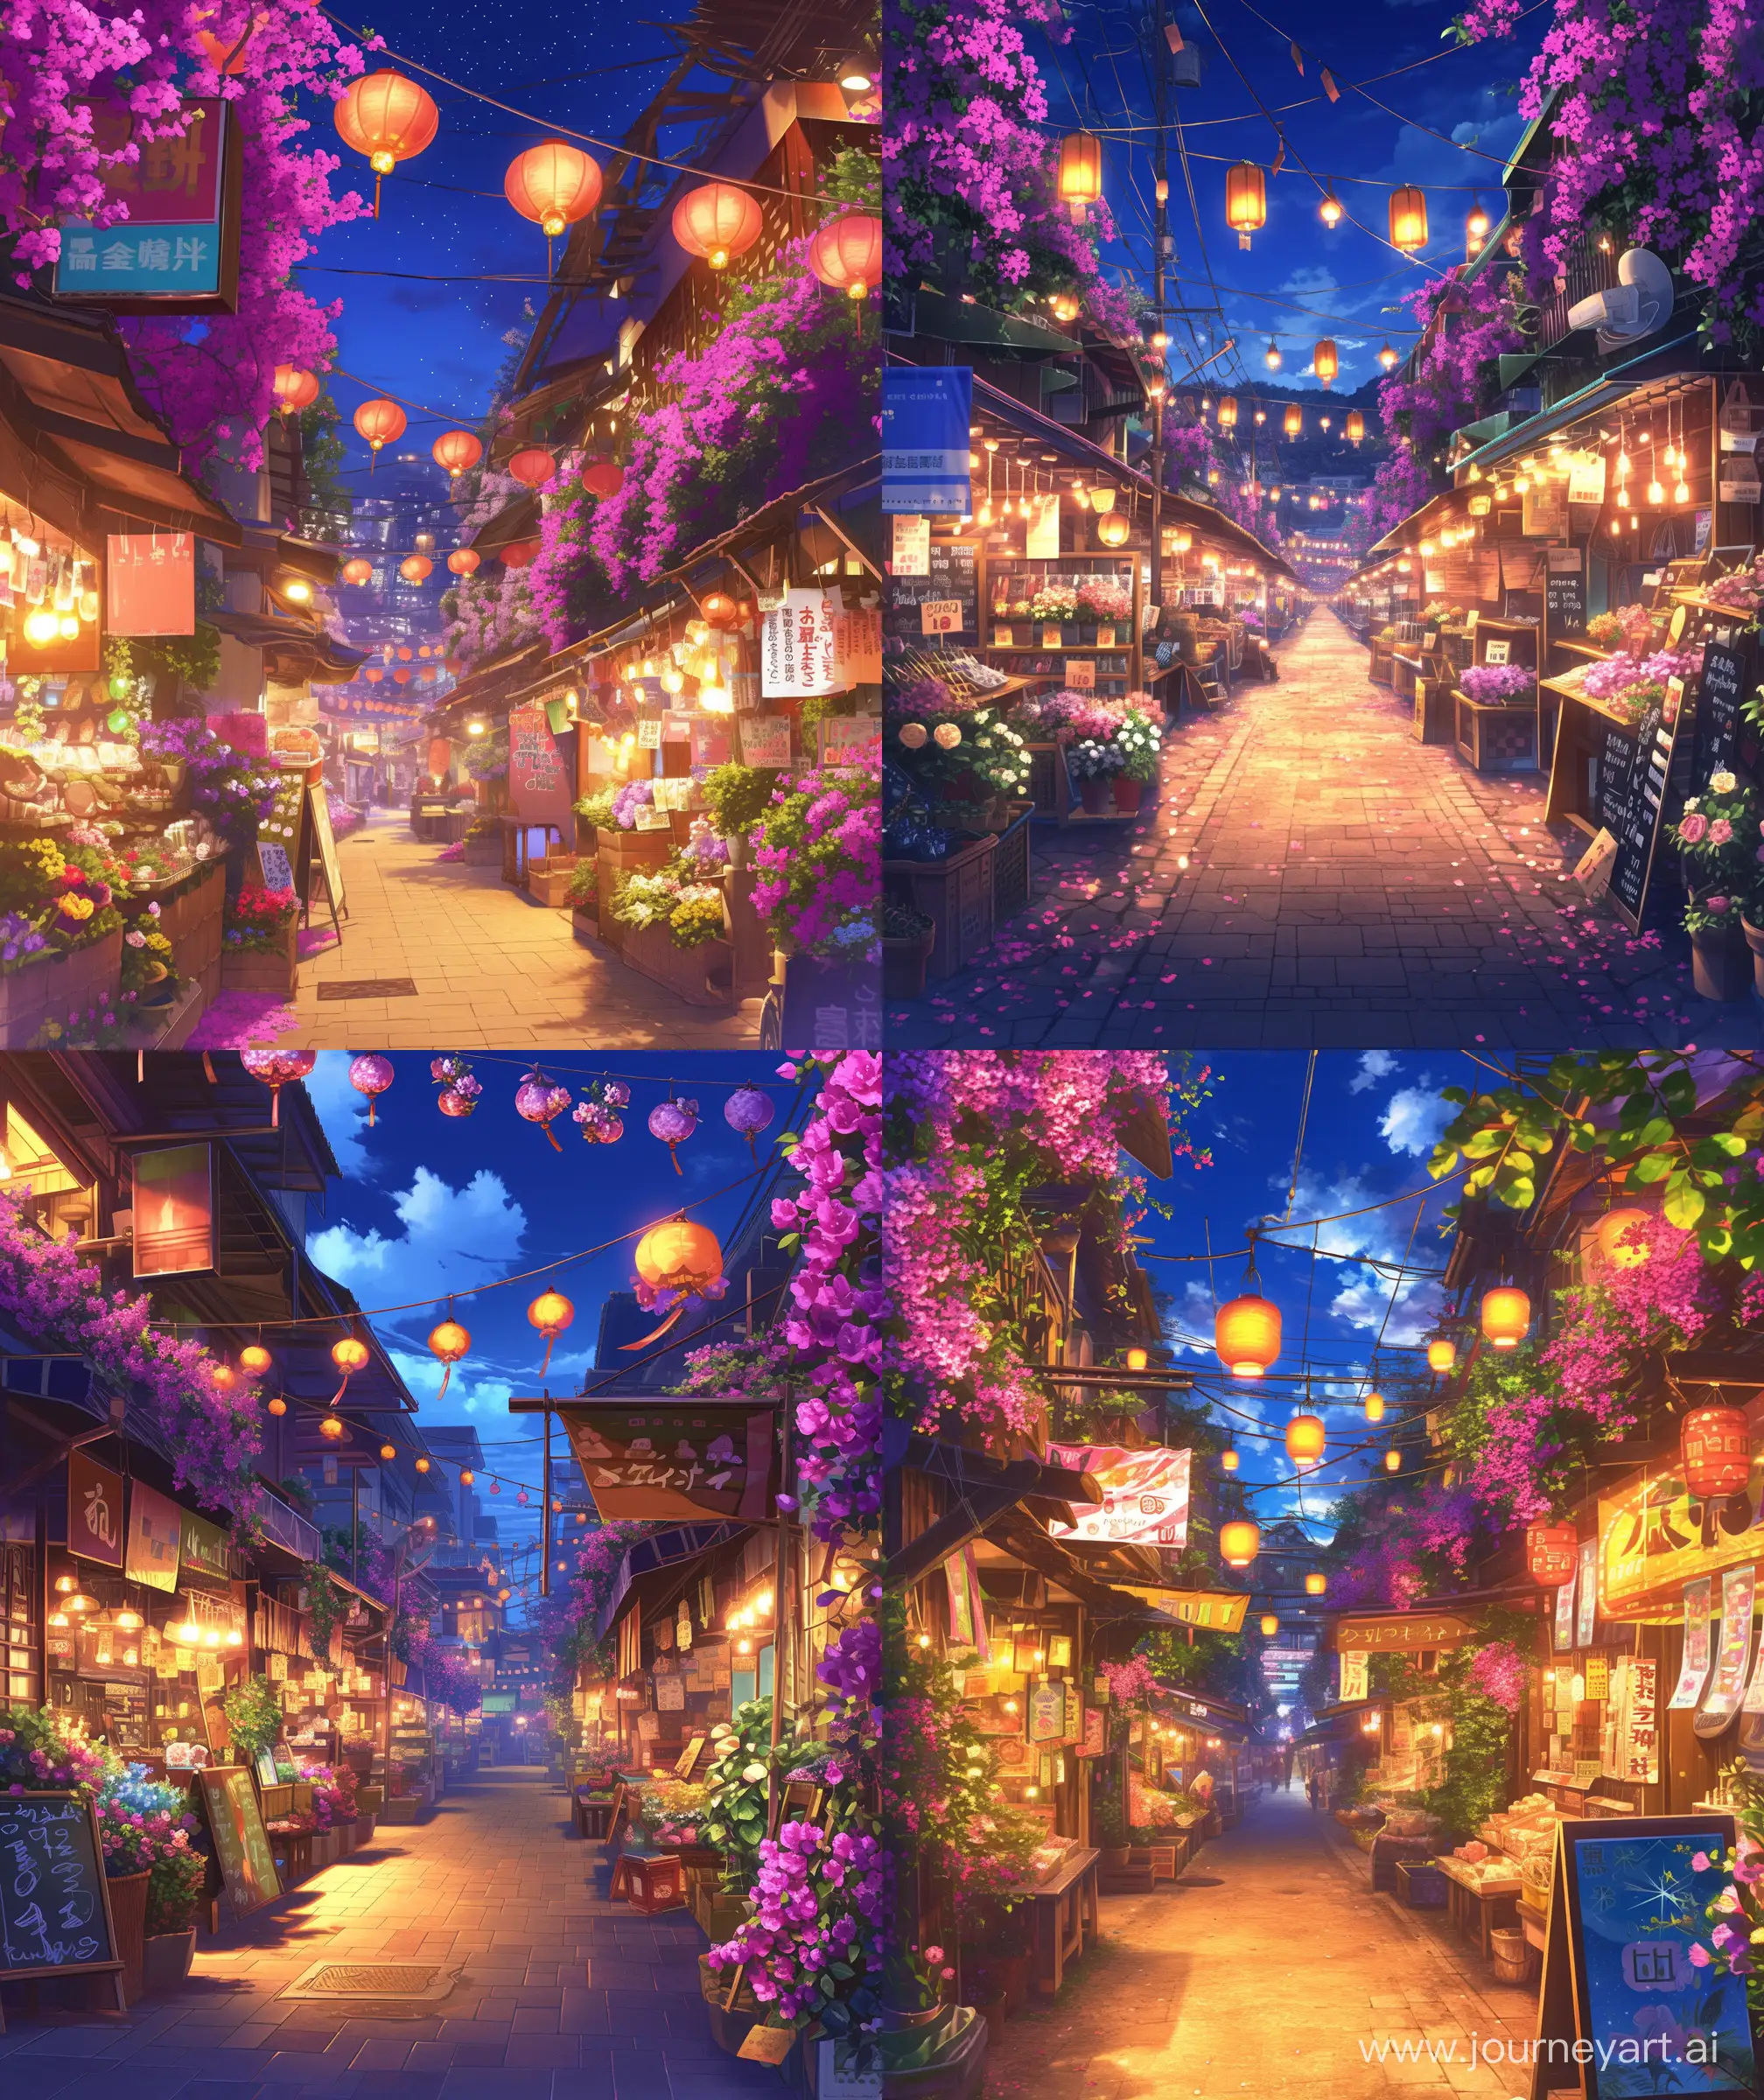 Mokoto shinkai style, Anime night market, hanging lantern, hanging lights, sign board, many shop both side of street, many flowers around, beautiful decoration, ultra HD, High quality, Bougainville, ultra hd, High quality --ar 27:32 --niji 6 